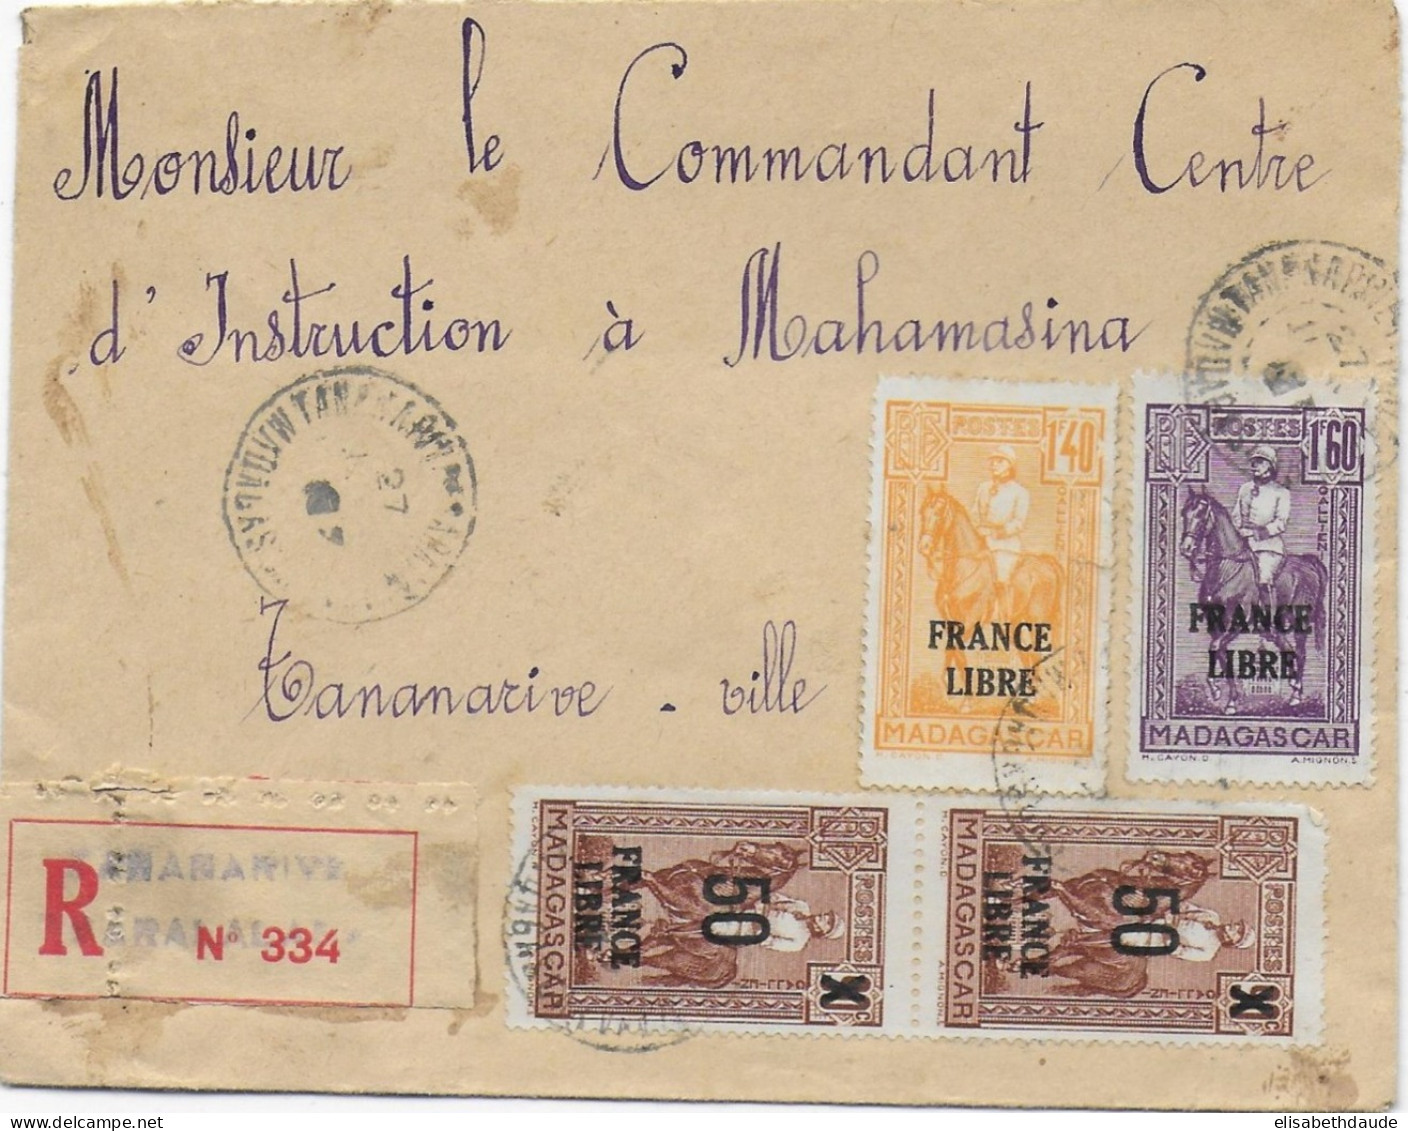 MADAGASCAR - 1943 - FRANCE LIBRE - ENVELOPPE RECOMMANDEE LOCALE De TANANARIVE - Lettres & Documents